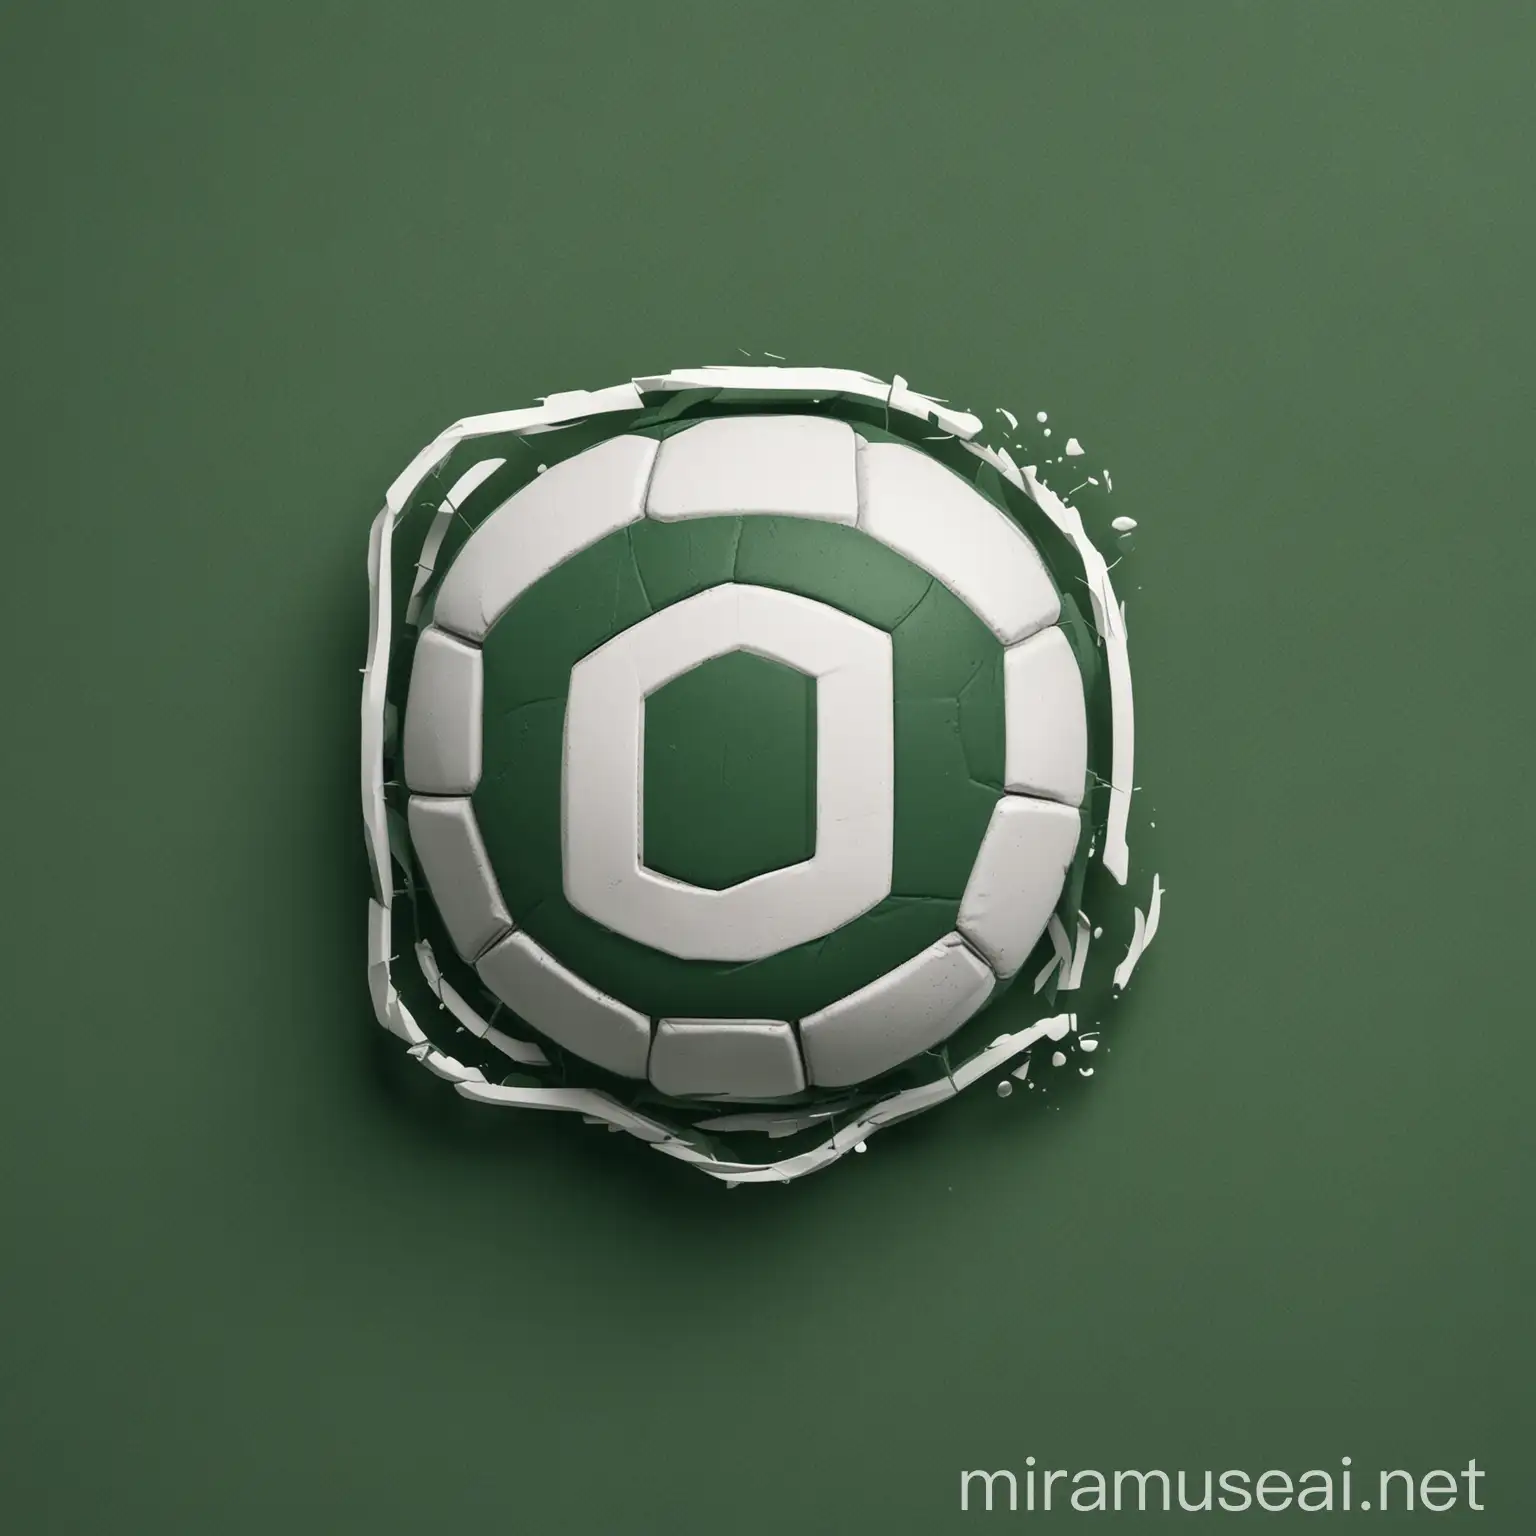 Dynamic Football Social Media Logo Sleek Design with Digital Connectivity